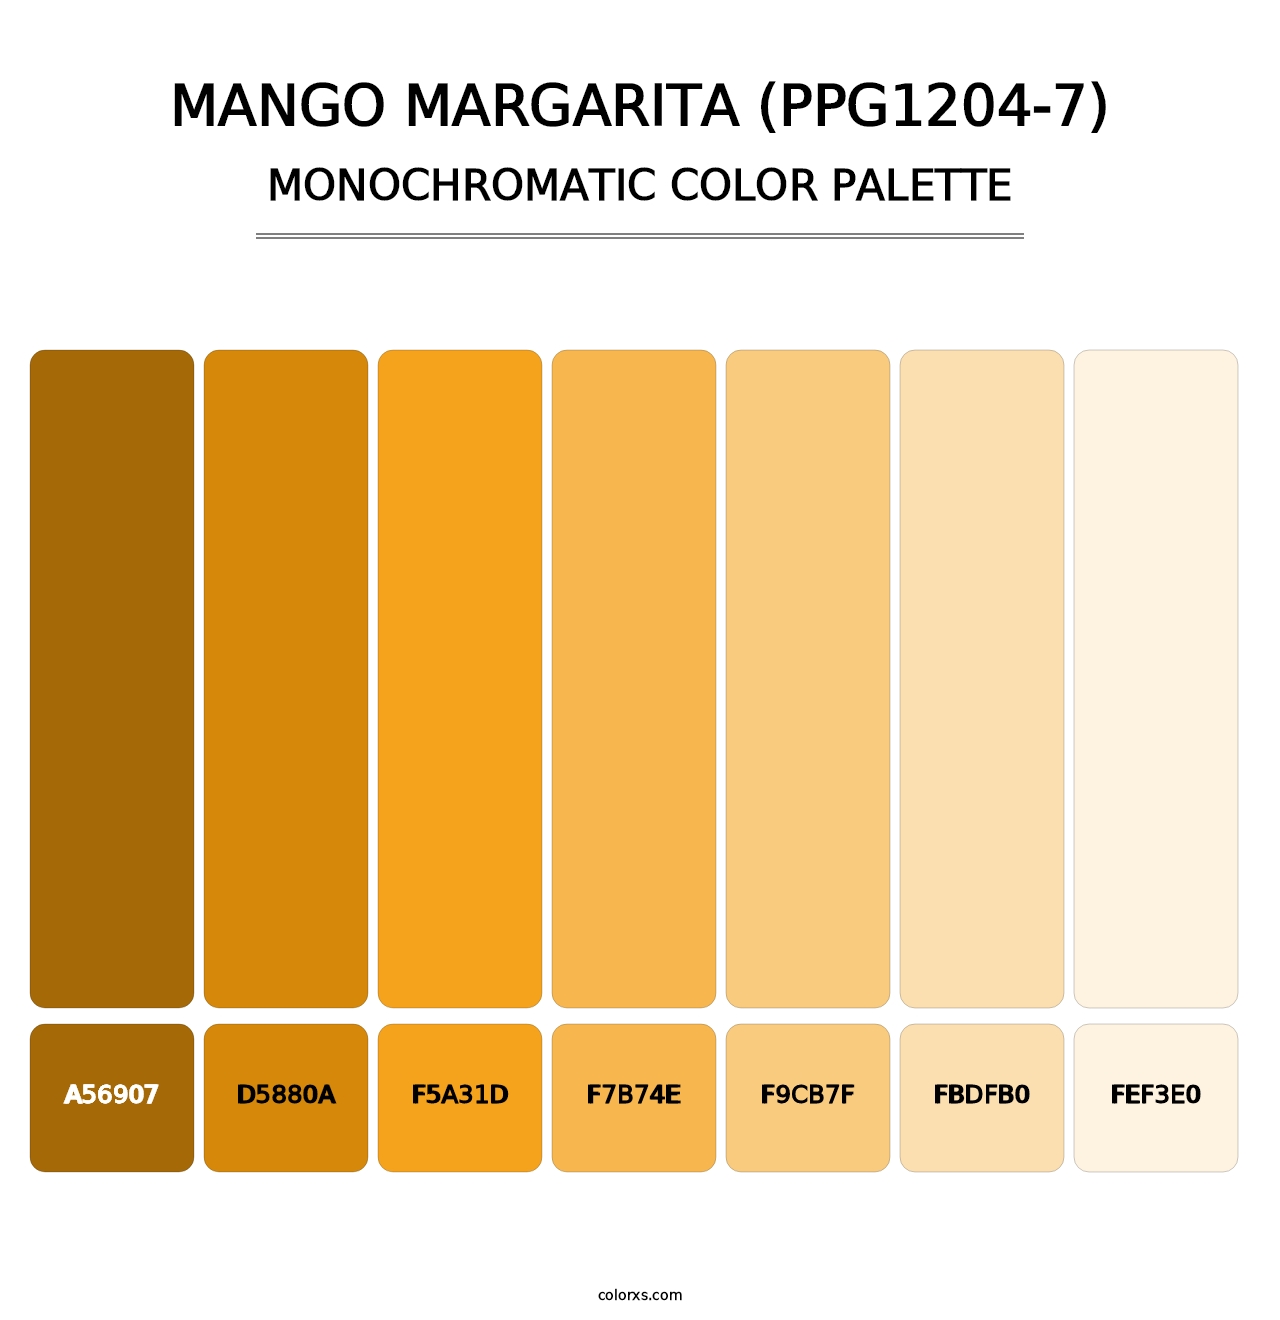 Mango Margarita (PPG1204-7) - Monochromatic Color Palette